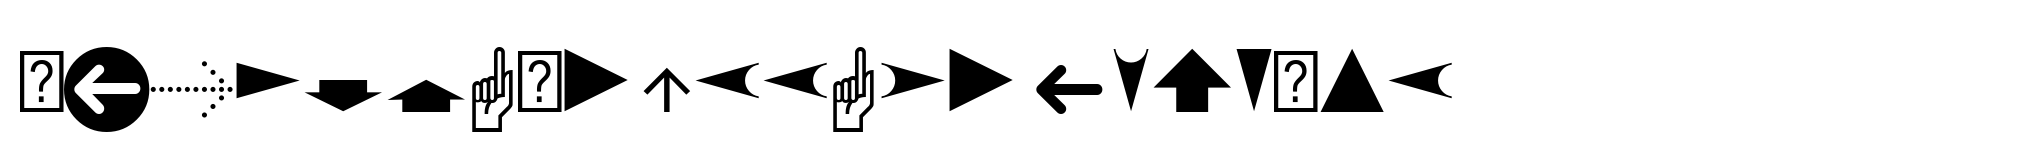 PIXymbols Arrows Regular image